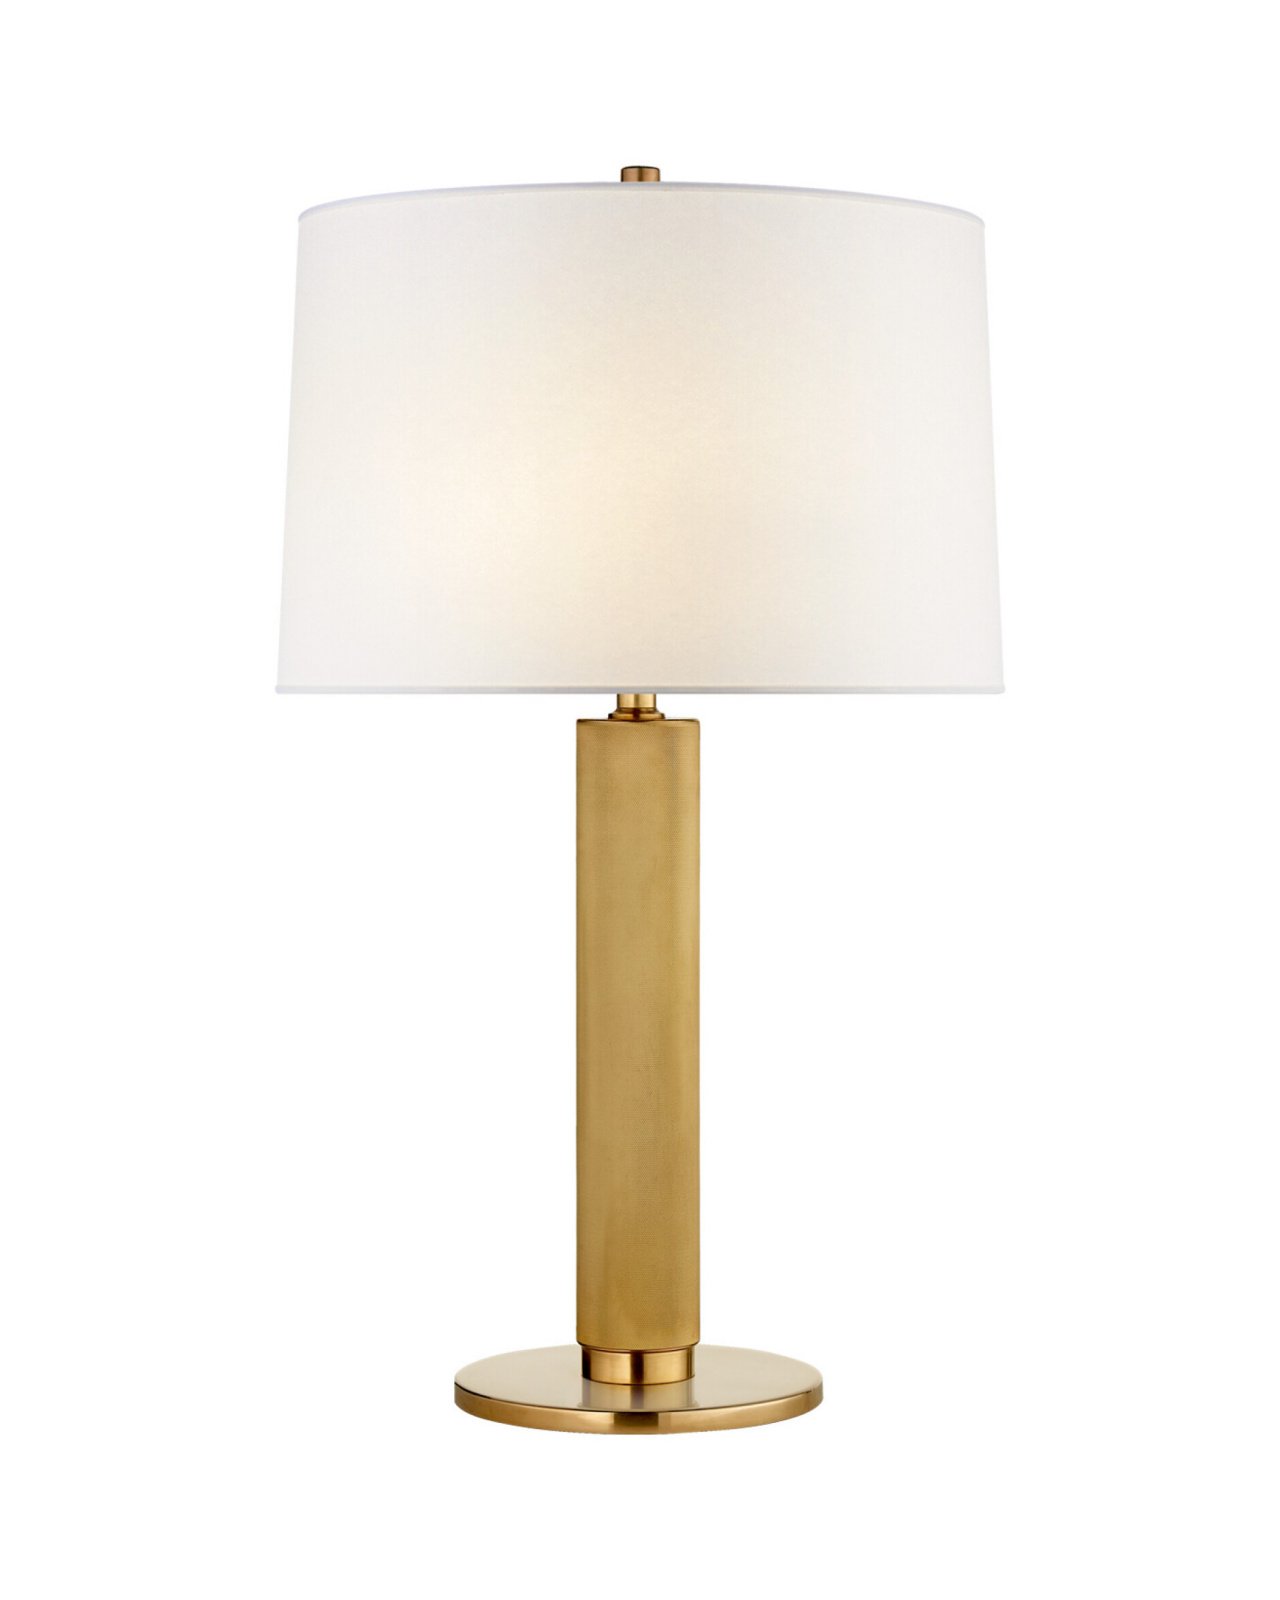 Barrett Knurled Table Lamp Natural Brass